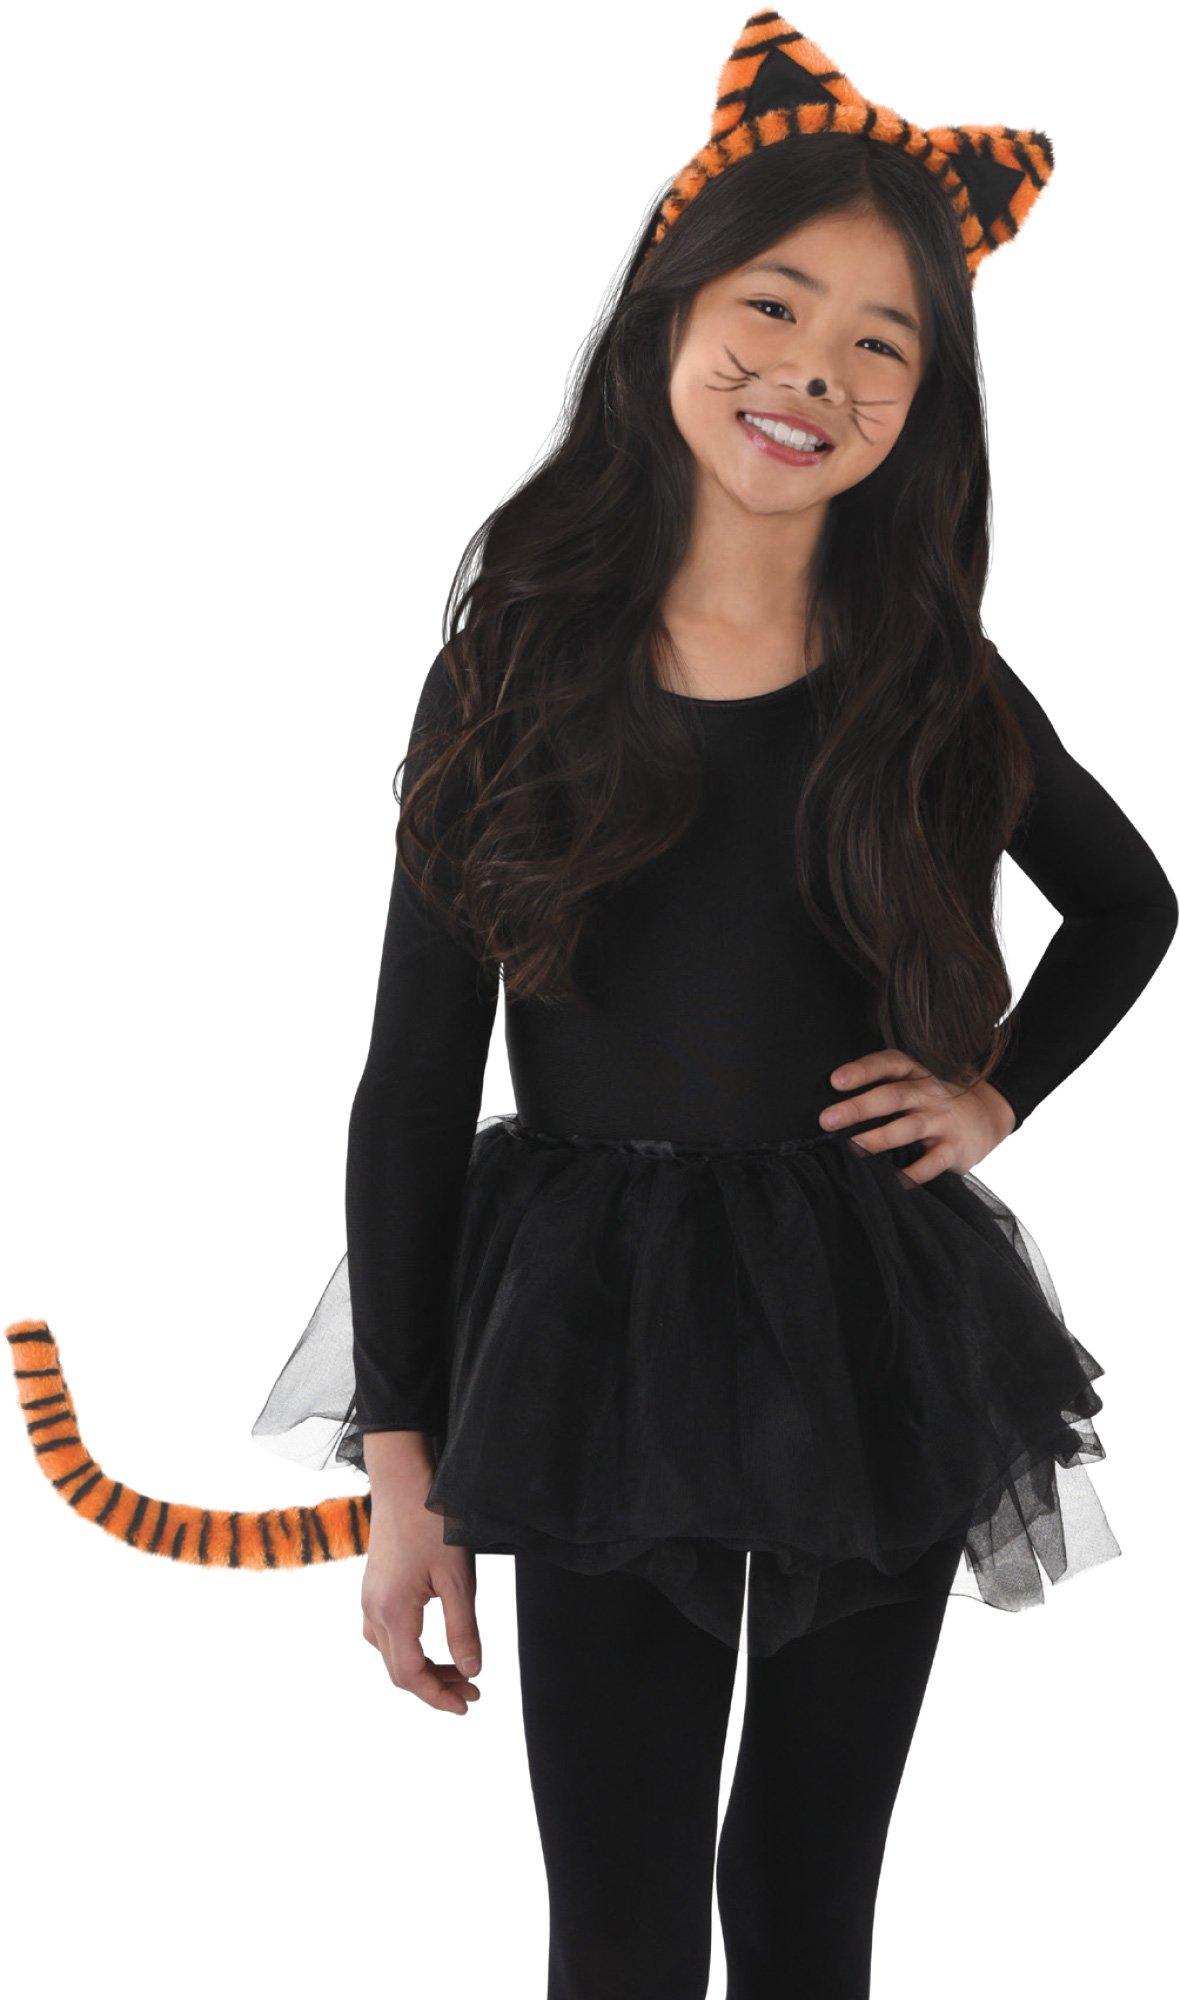 Tiger Costume Accessory Kit